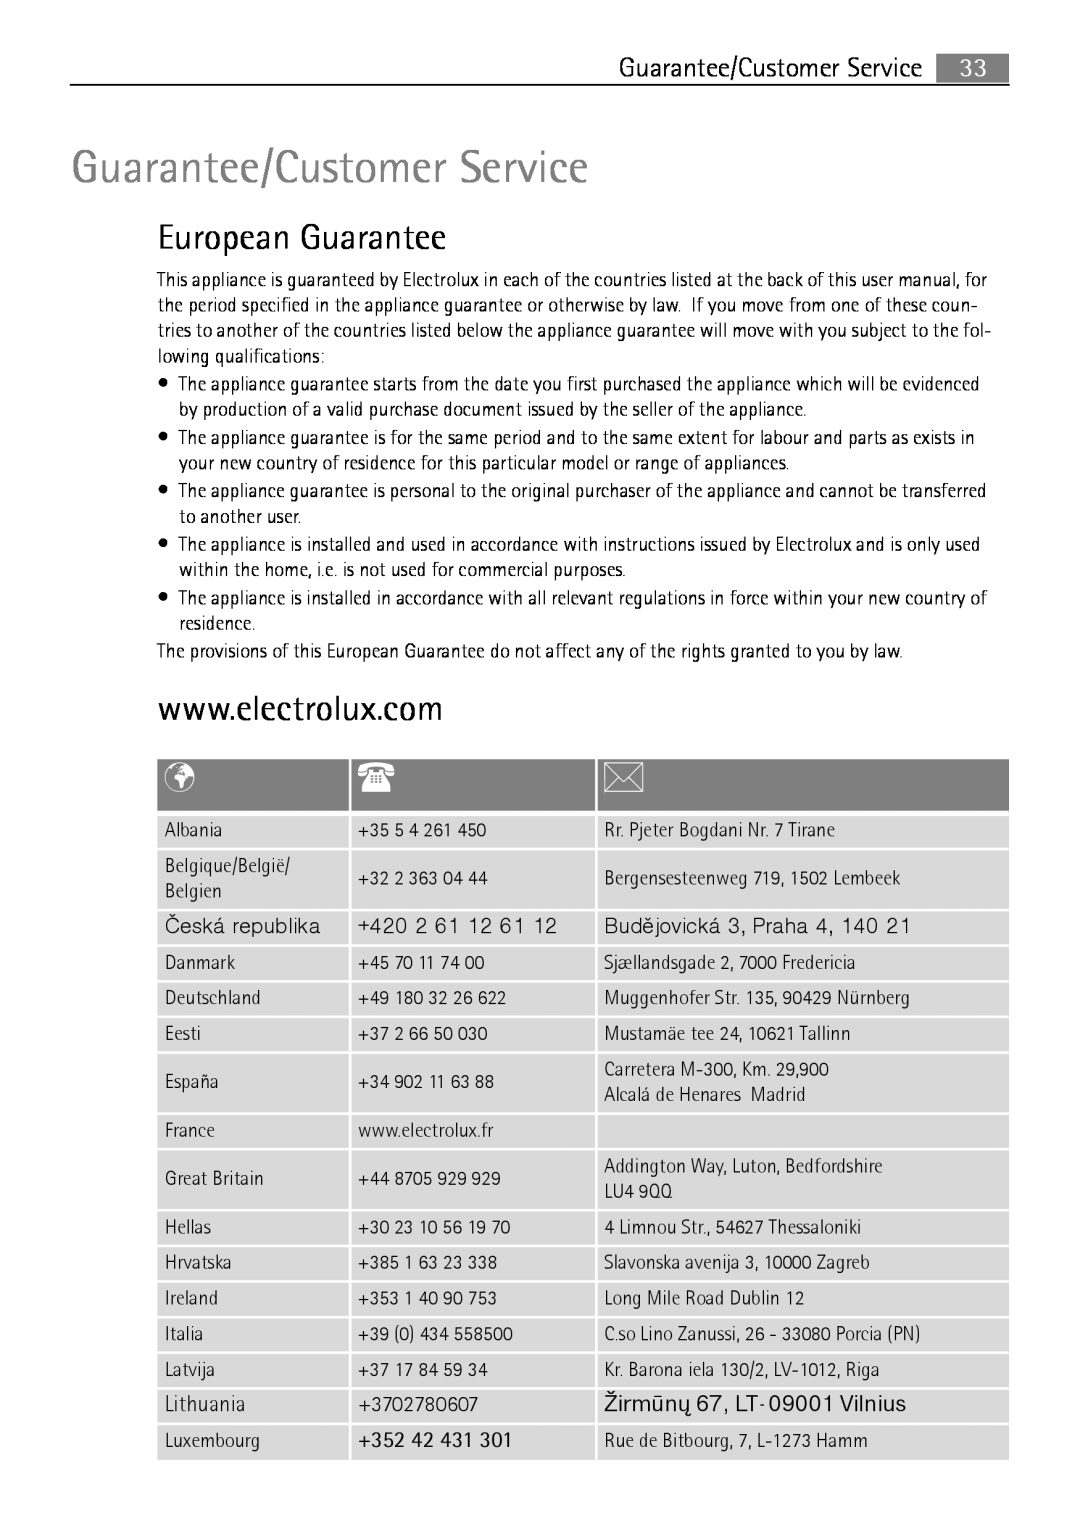 Electrolux 66331KF-N Guarantee/Customer Service, European Guarantee, Èeská republika, +420 2 61 12 61, Lithuania 